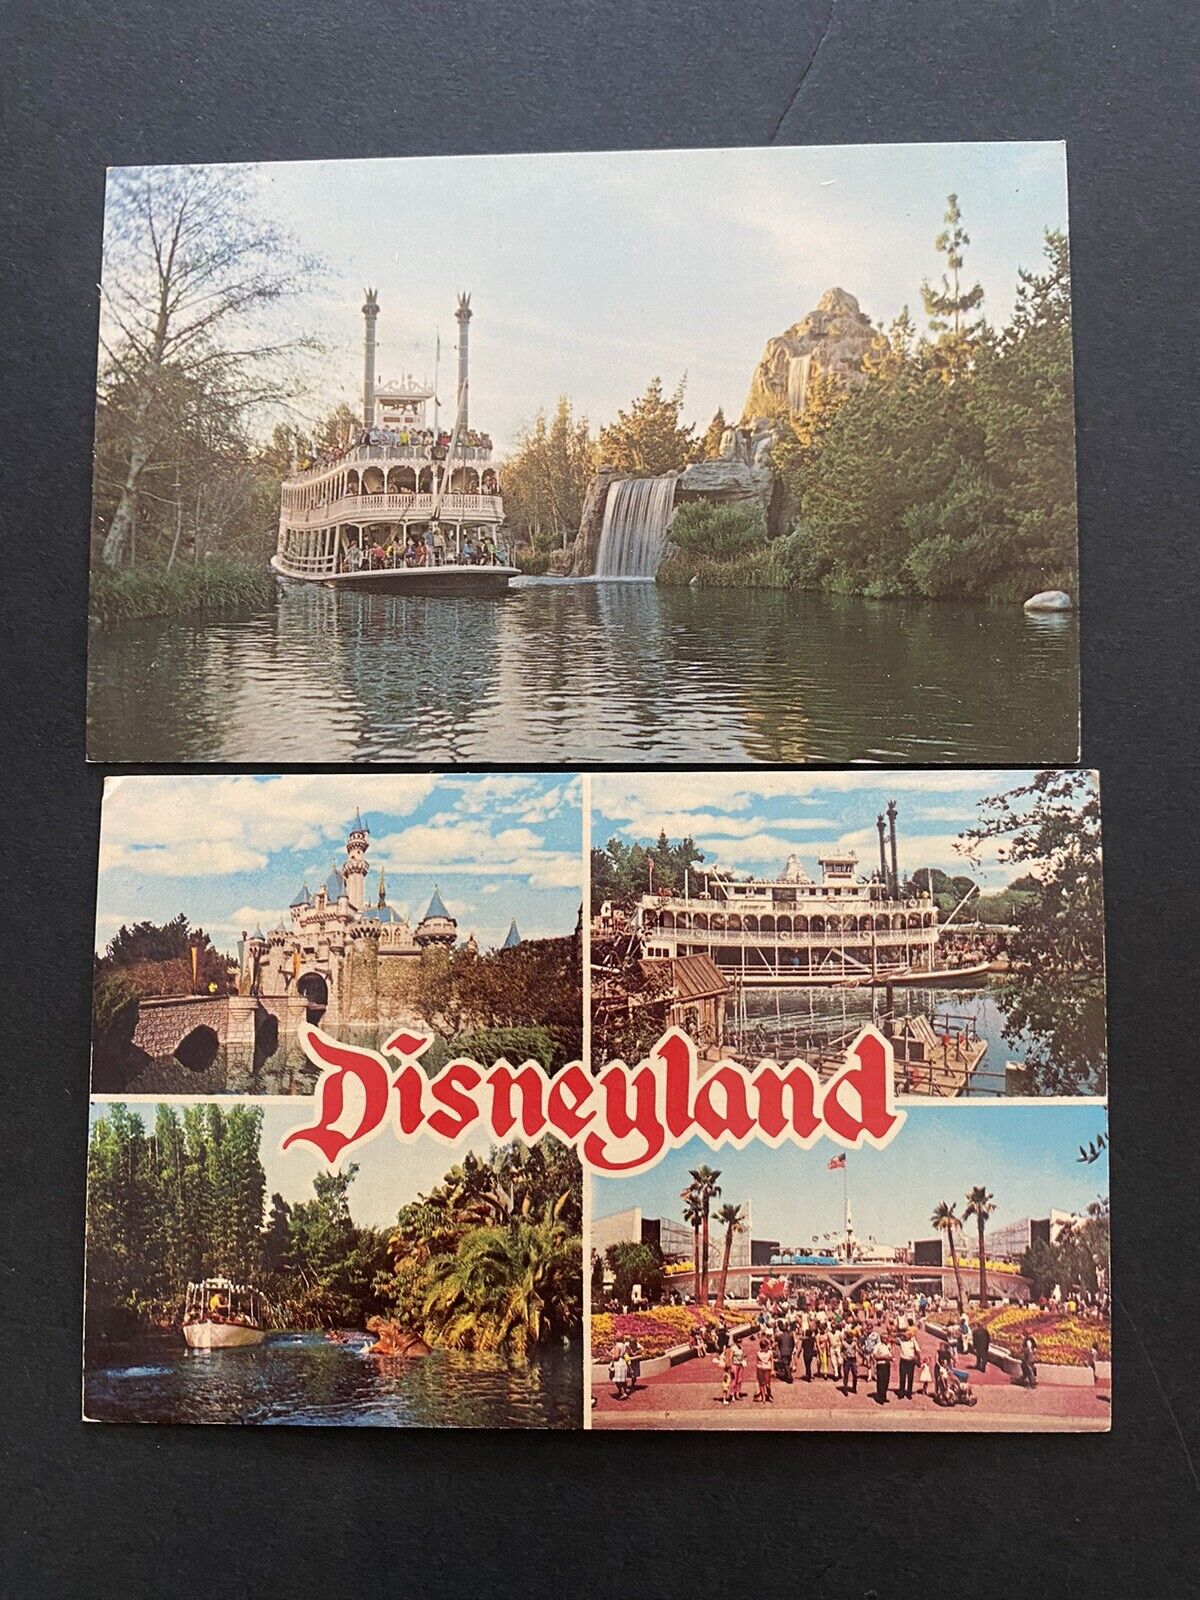 Vintage 1970’s Disneyland Postcard The Magic Kingdom Lot Of 2